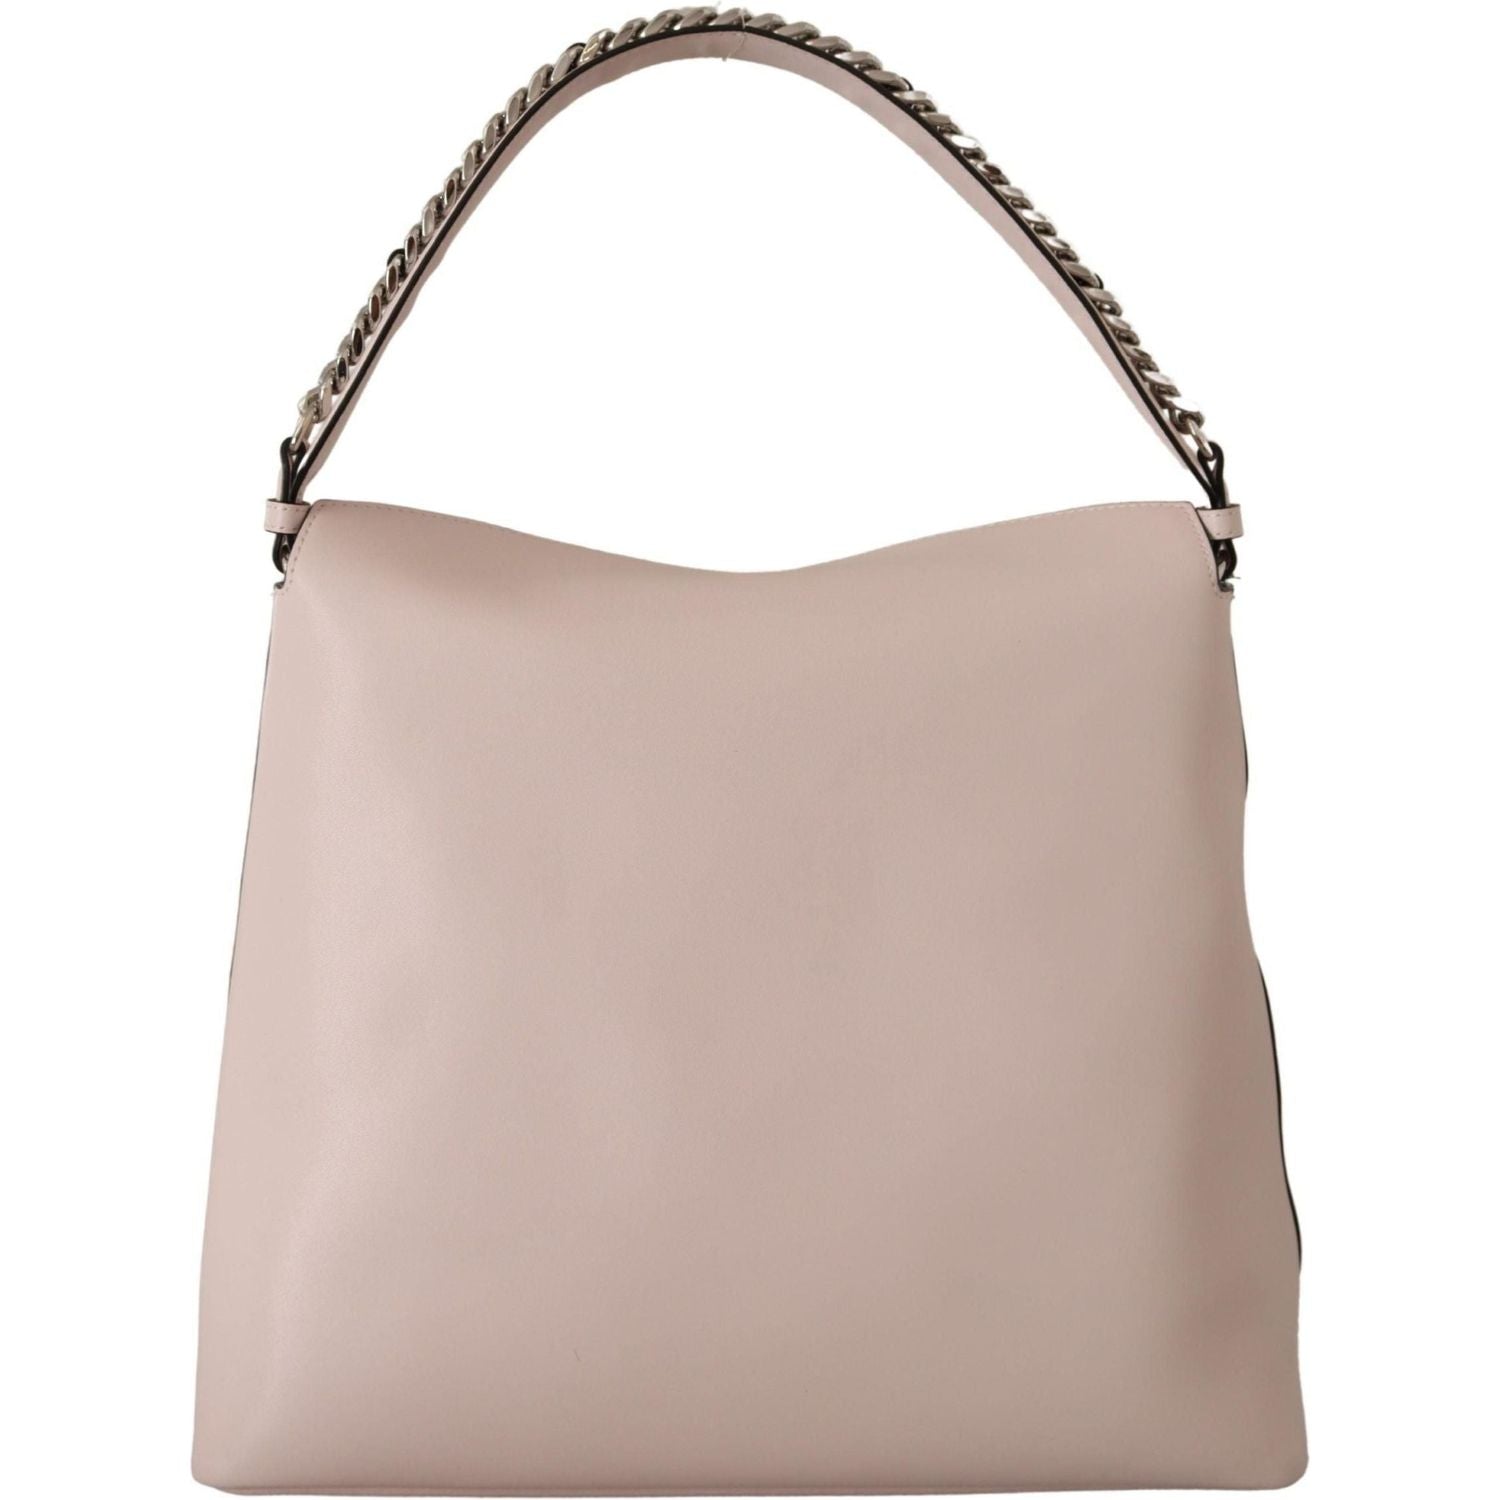 Handbag Designer By Karl Lagerfeld Size: Medium